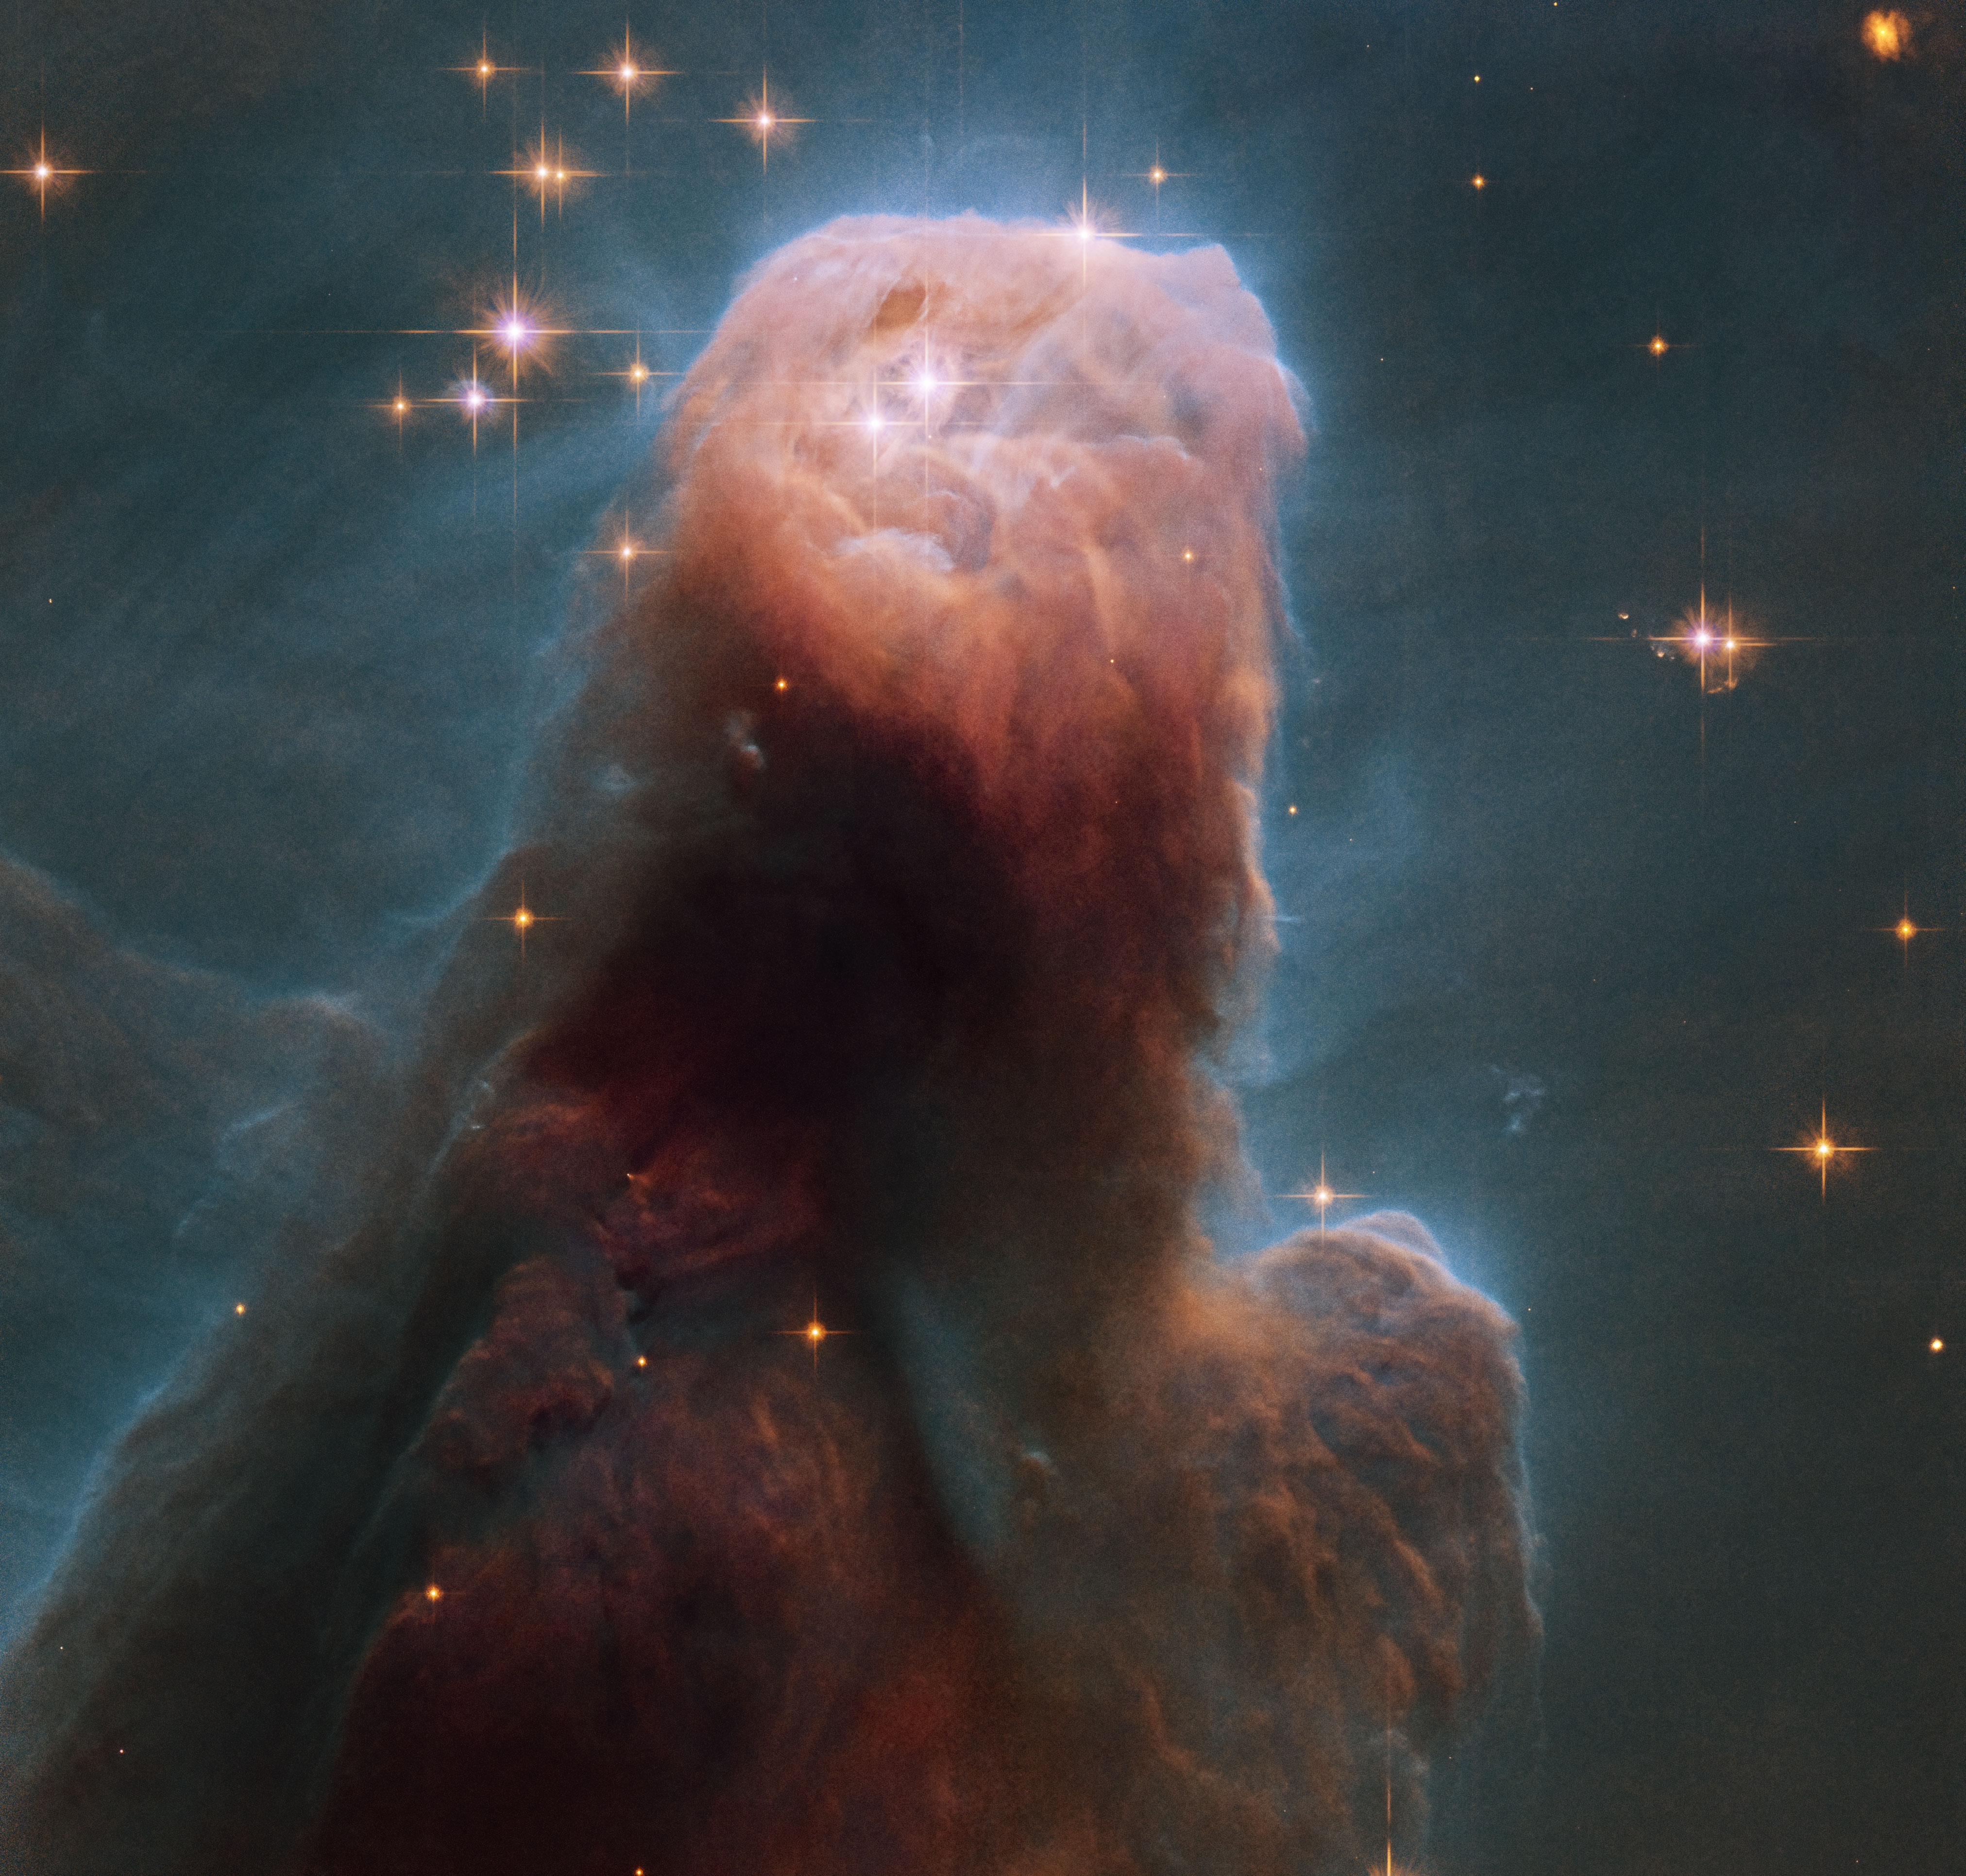 APOD - Cone Nebula Image Credit: Hubble Legacy Archive, NASA, ESA - Processing & Licence: Judy Schmidt 